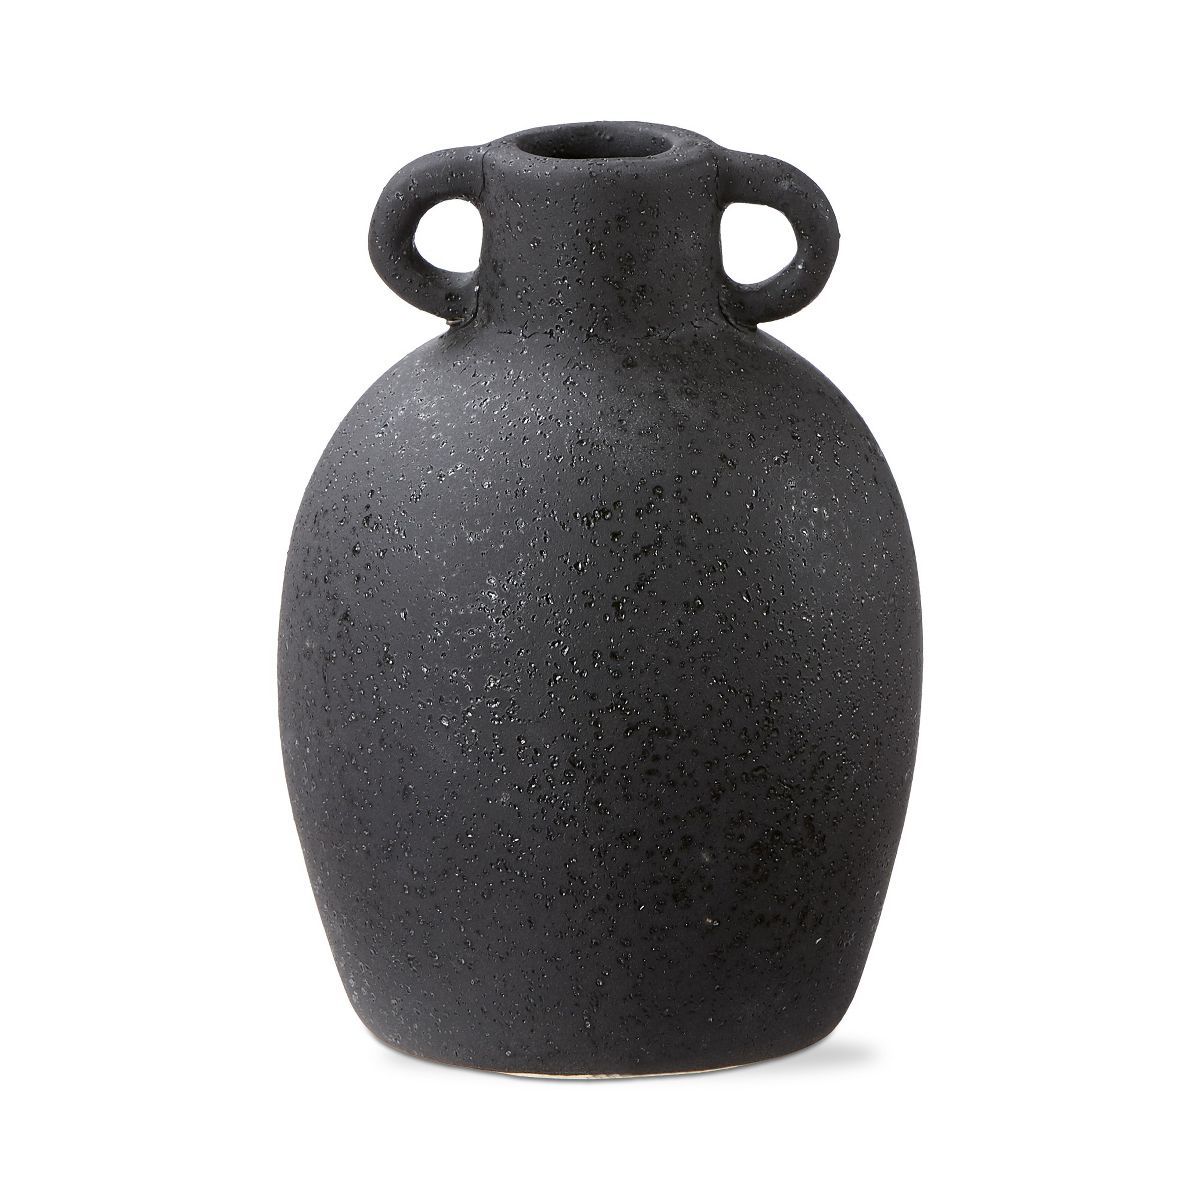 TAG Kuro Black Stoneware Indoor Decorative Vase Small, 3.94L x 3.94W x 5.31H inches | Target